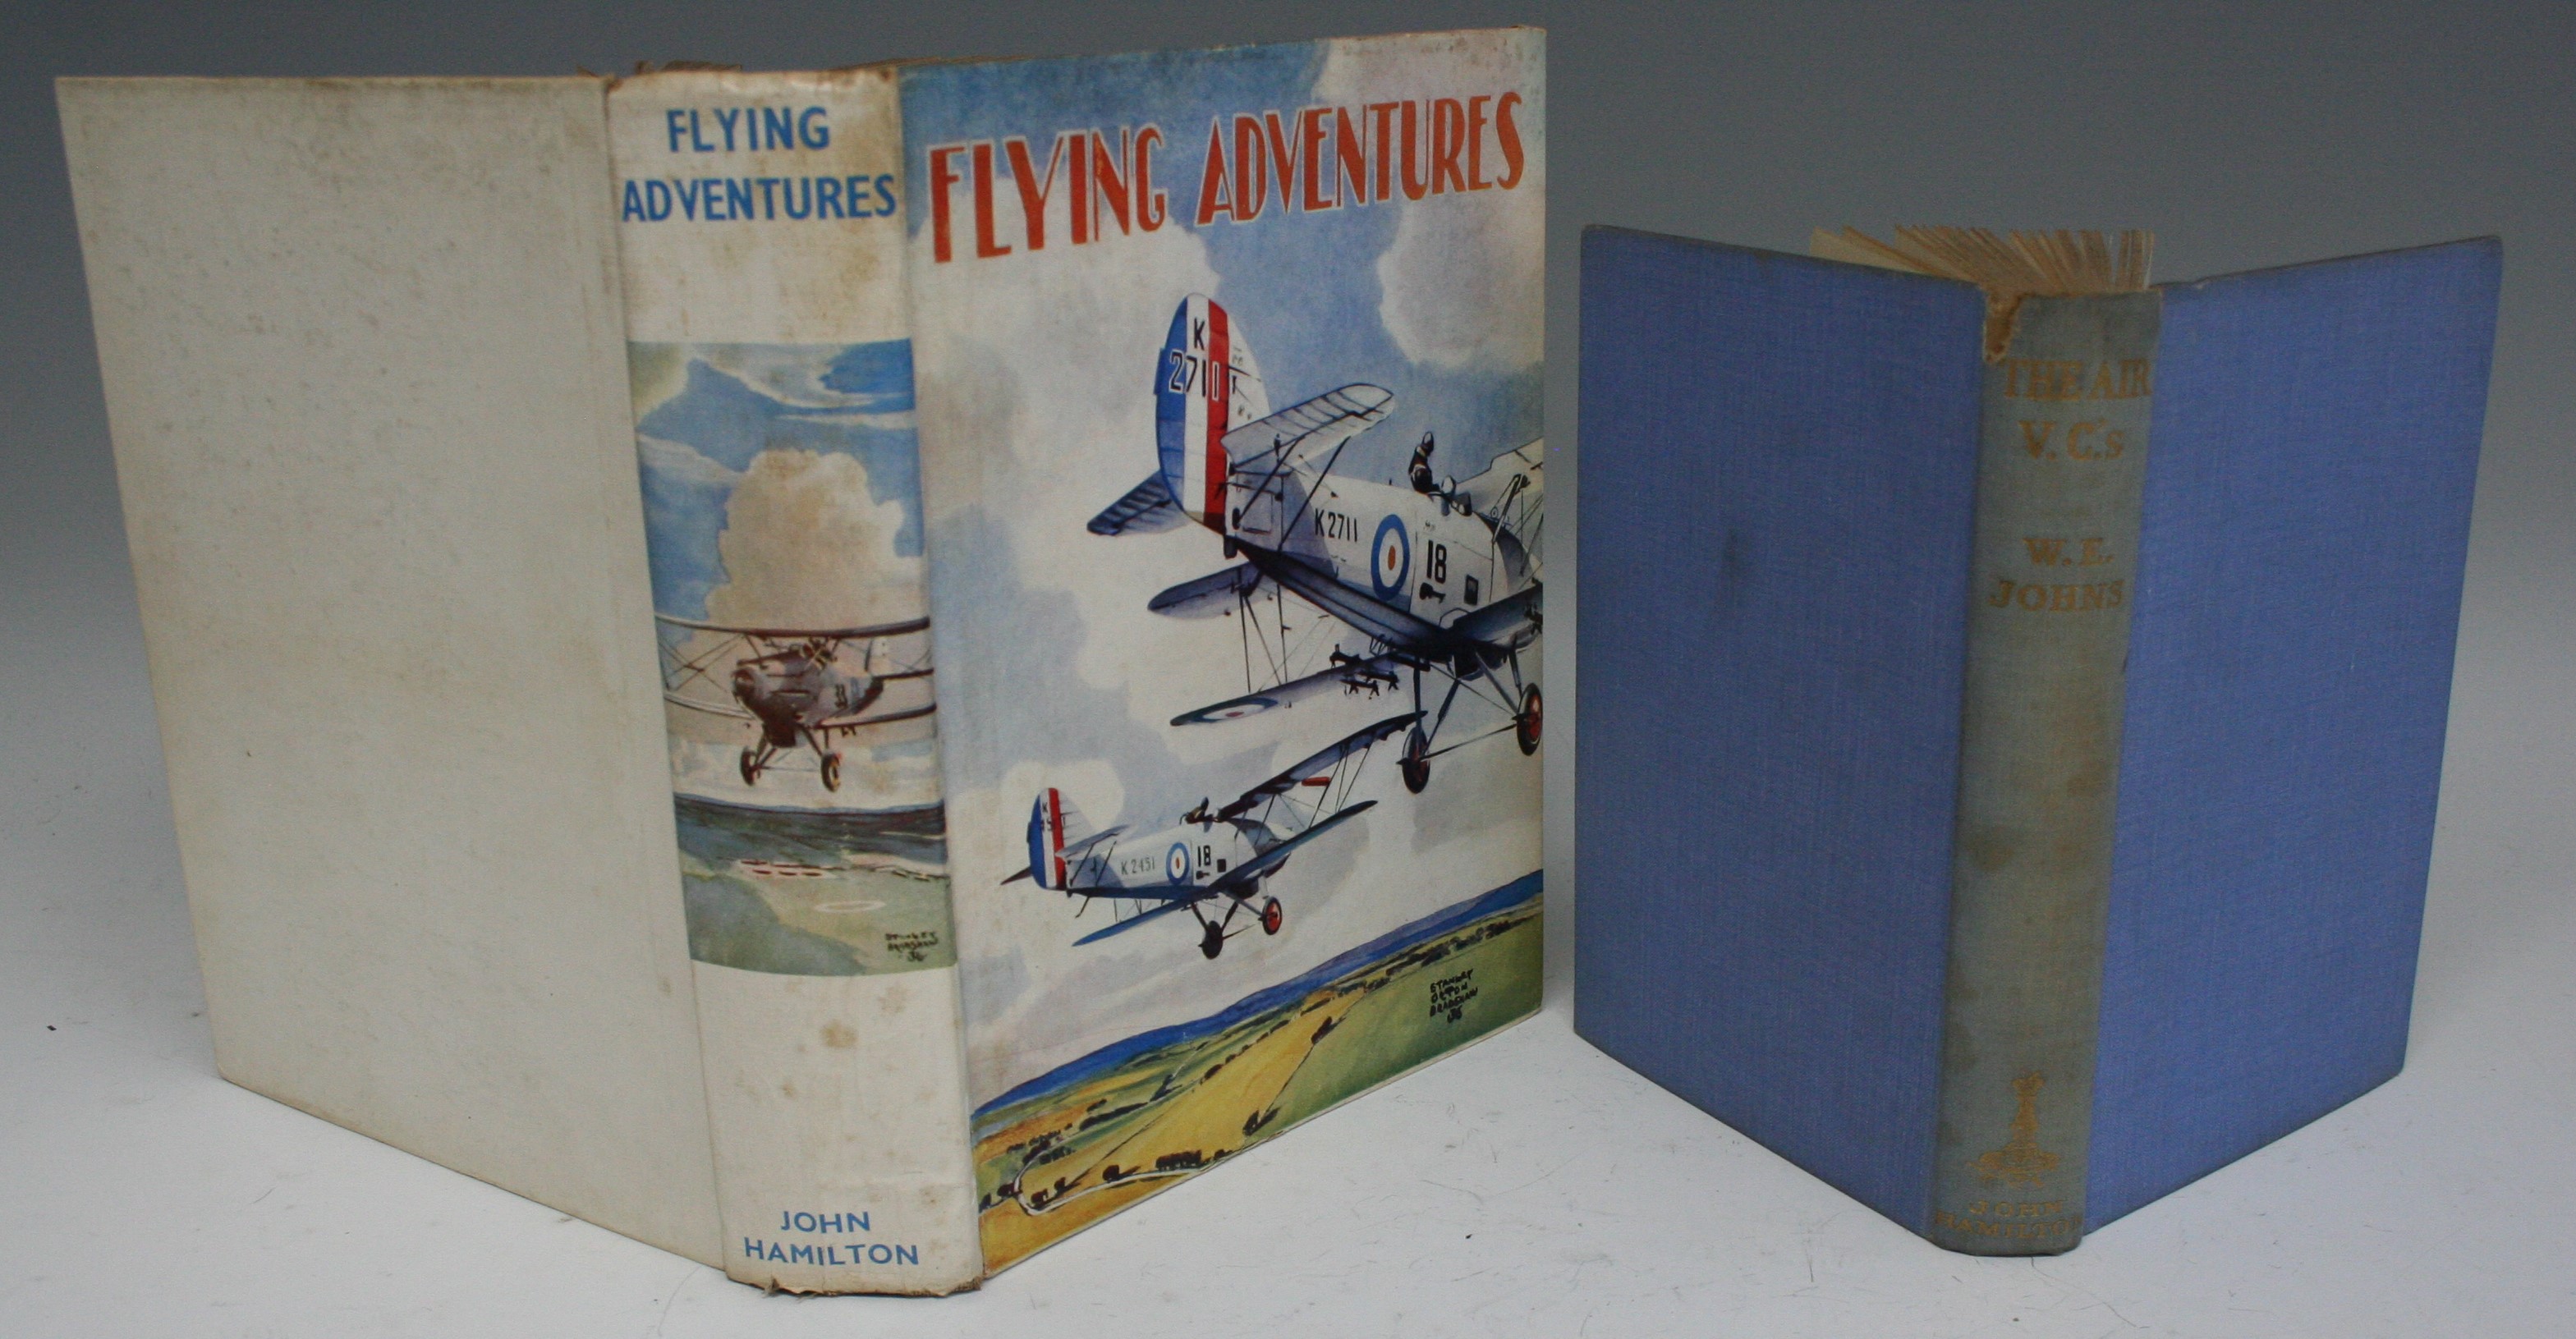 JOHNS, W.E. The Air VC’s. John Hamilton, London, [1935] 1 st Edition. In original publisher’s cloth,